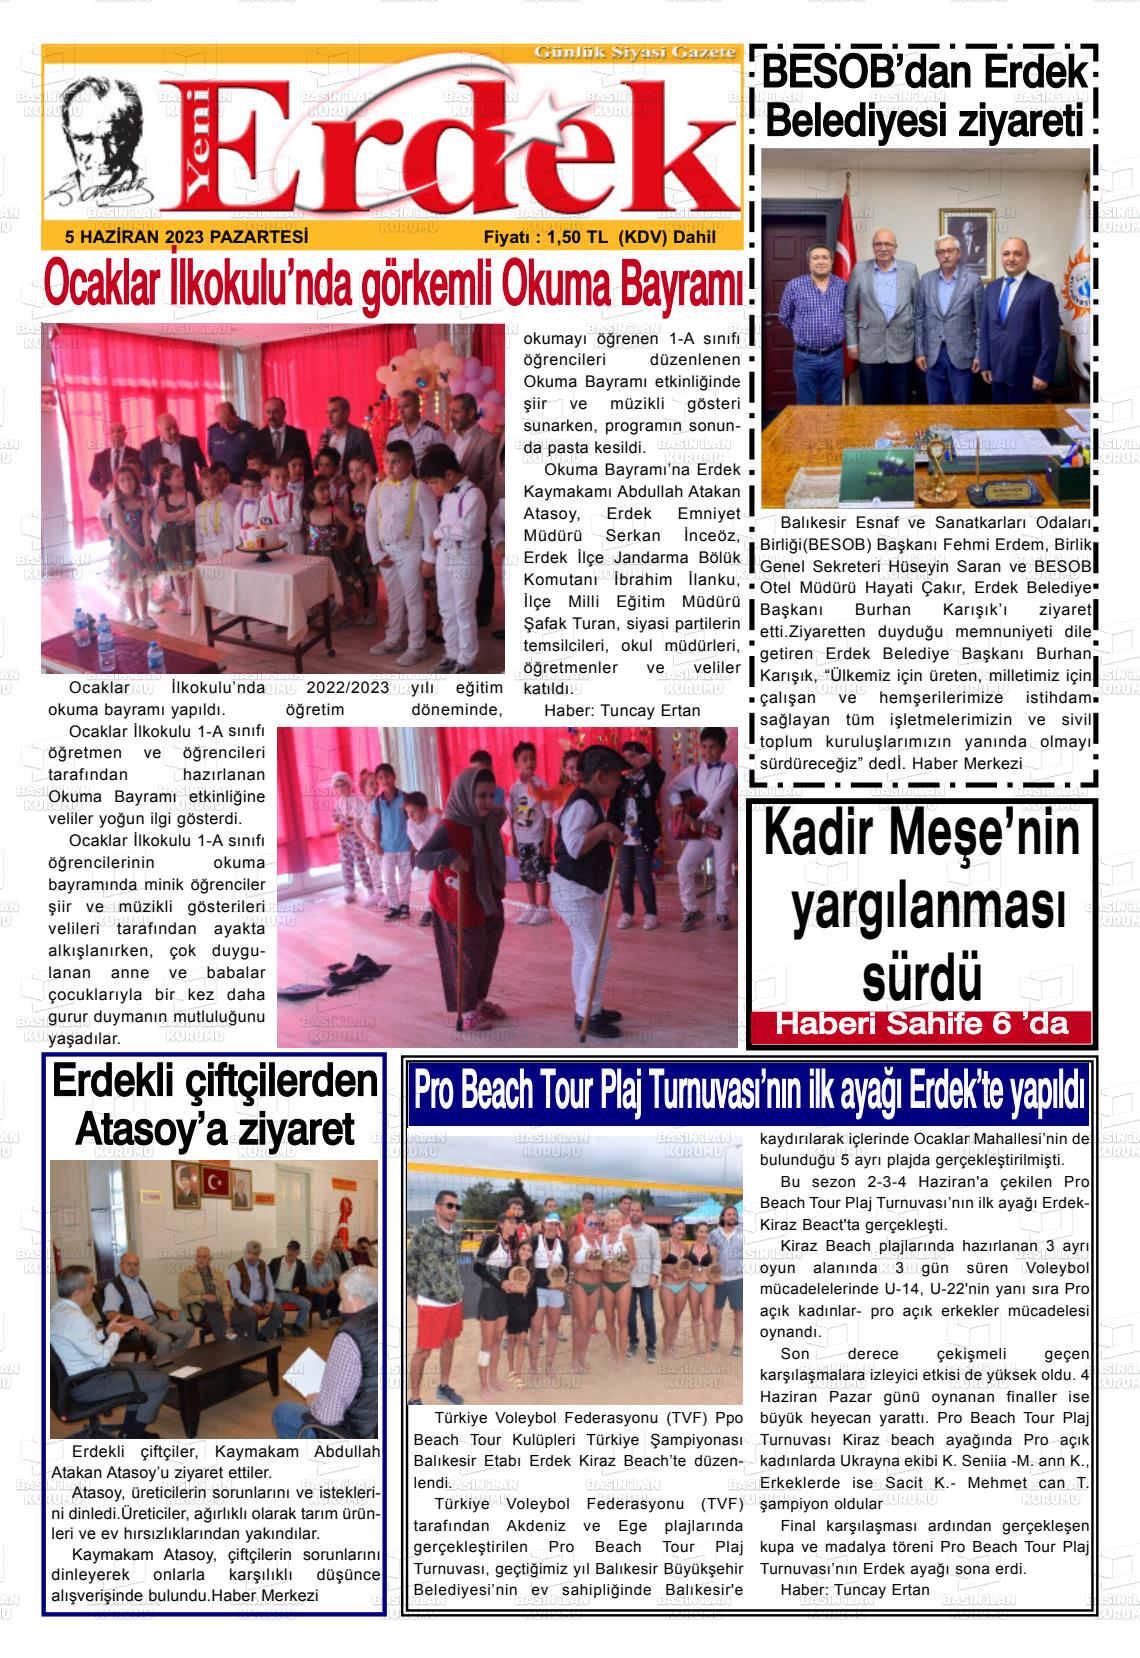 05 Haziran 2023 Yeni Erdek Gazete Manşeti